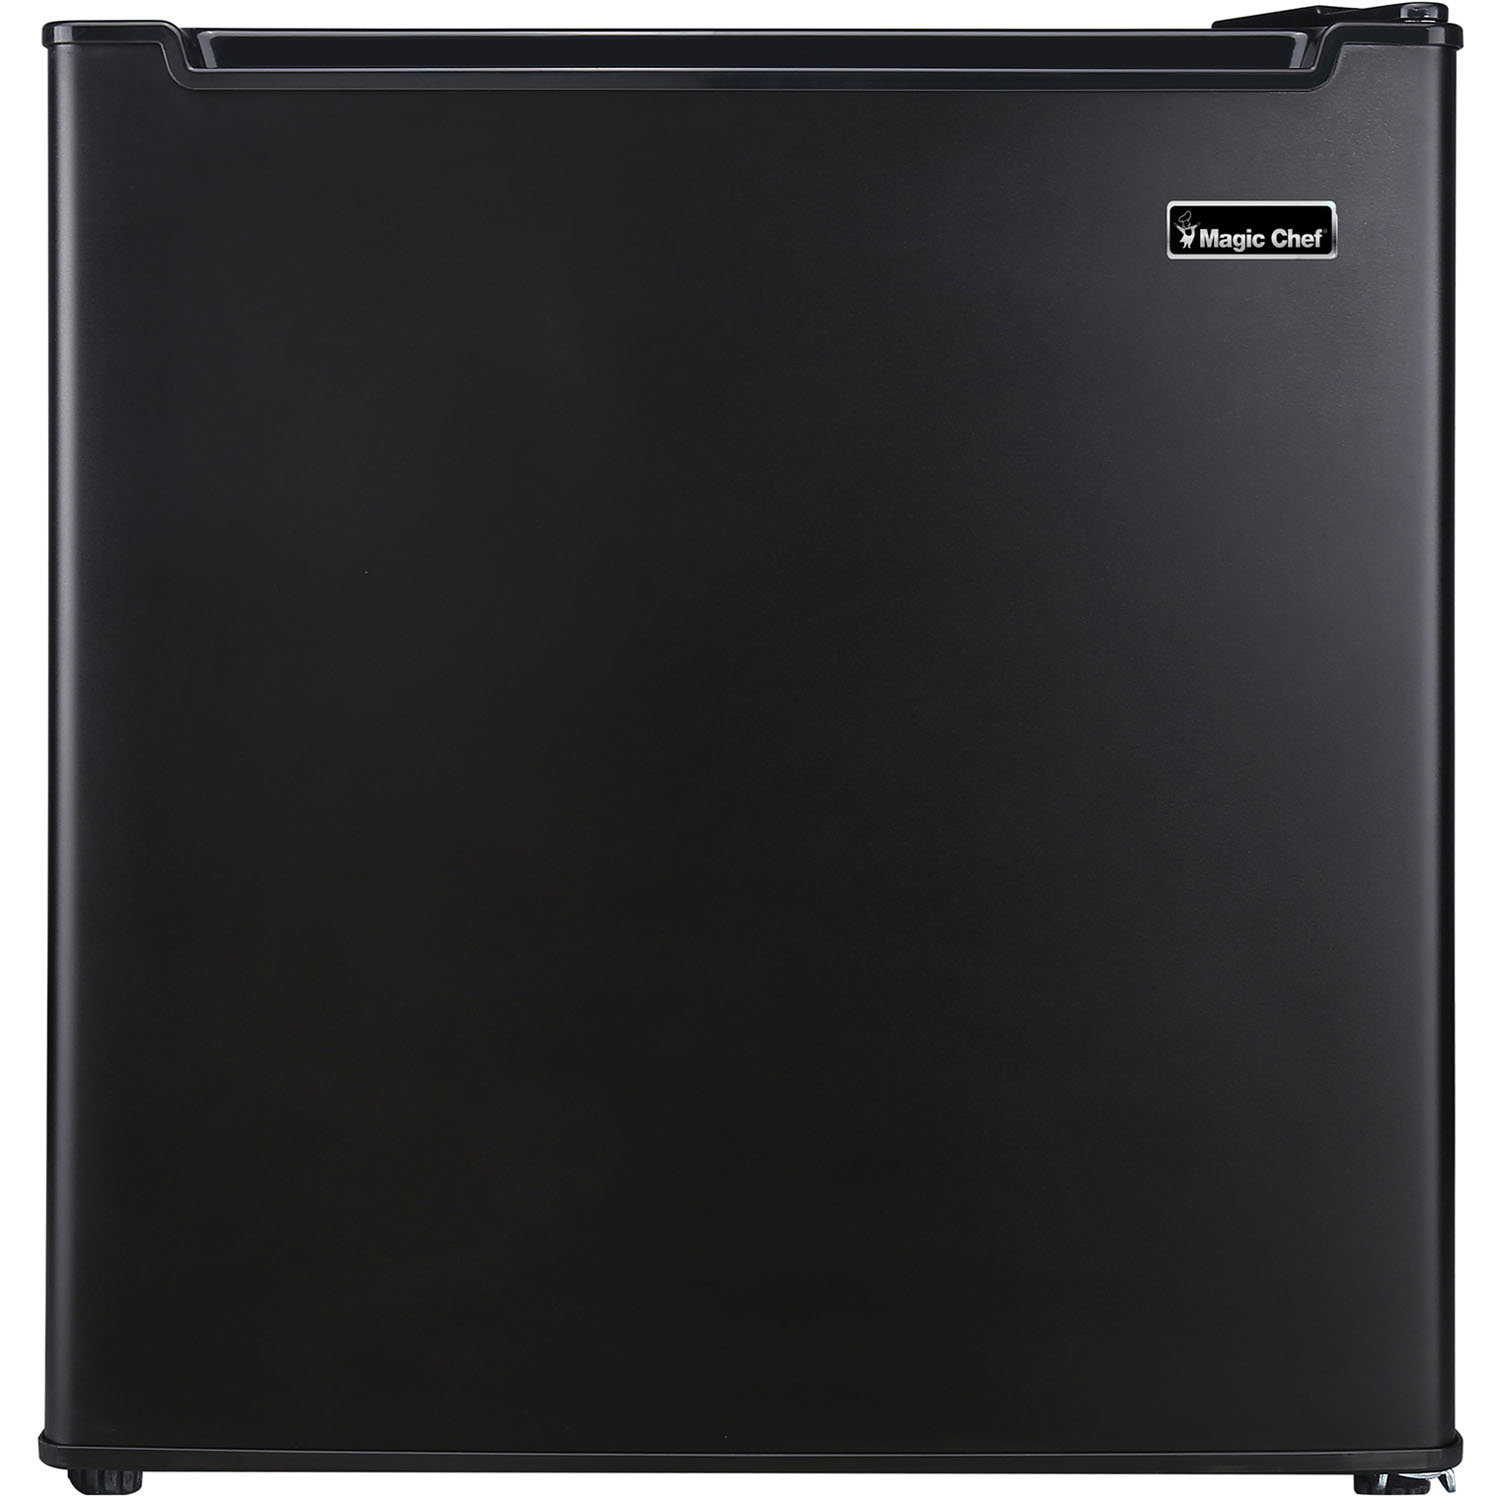 Magic Chef Energy Star 1.7 Cu. Ft. Mini All-Refrigerator in Black - image 1 of 4